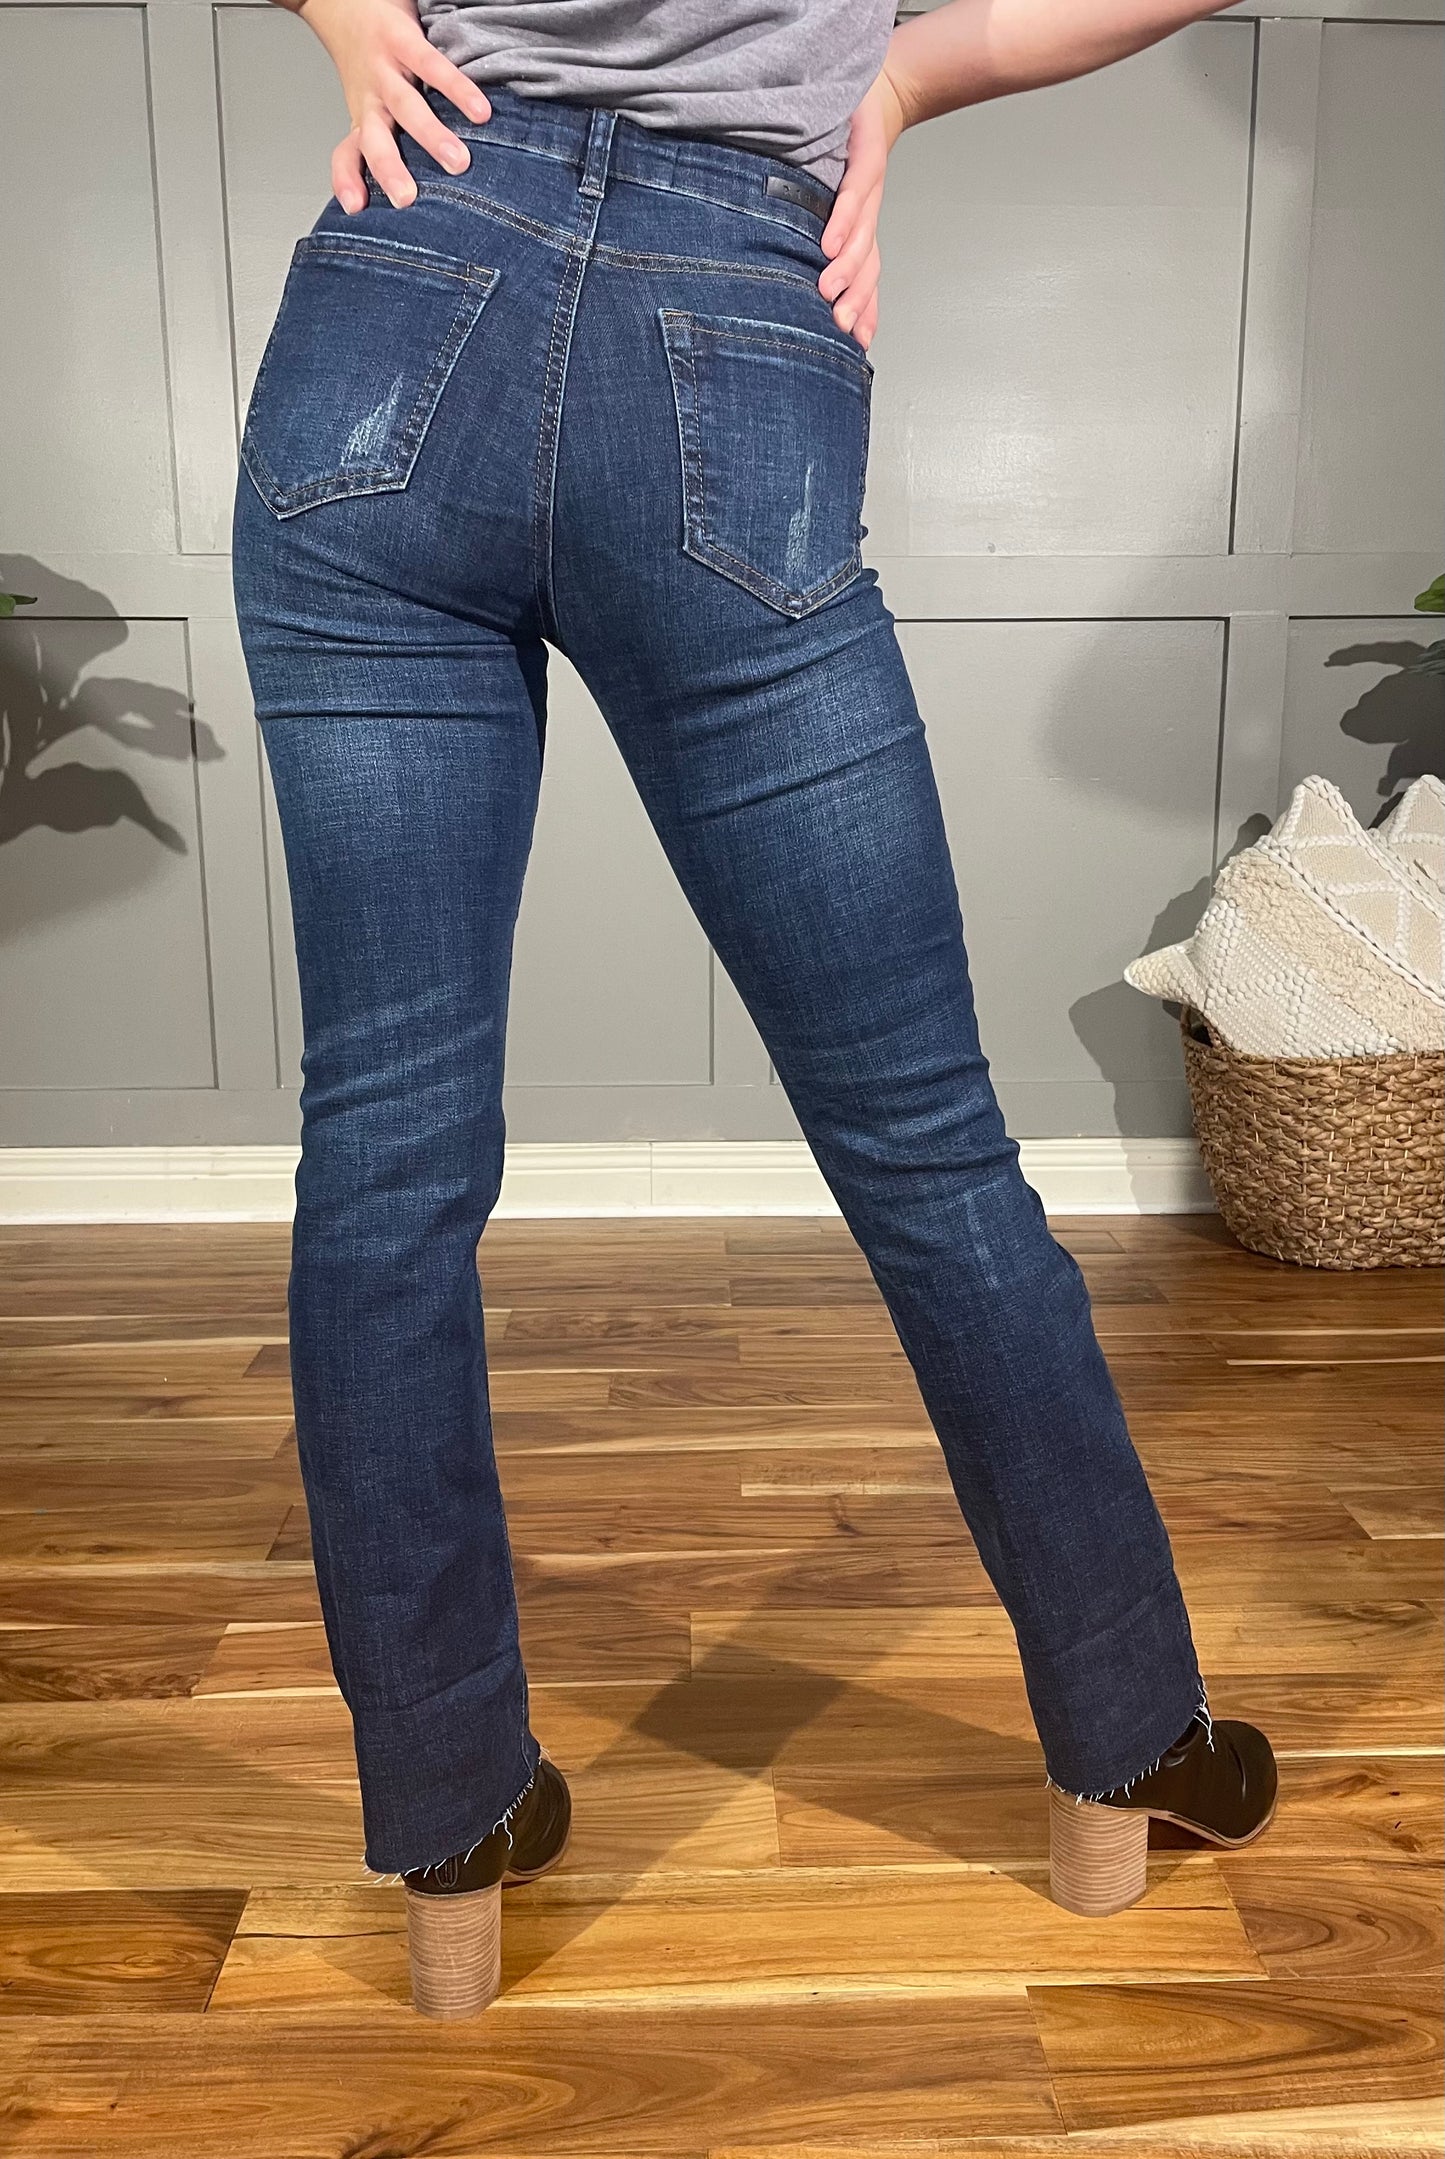 The Savannah Jean